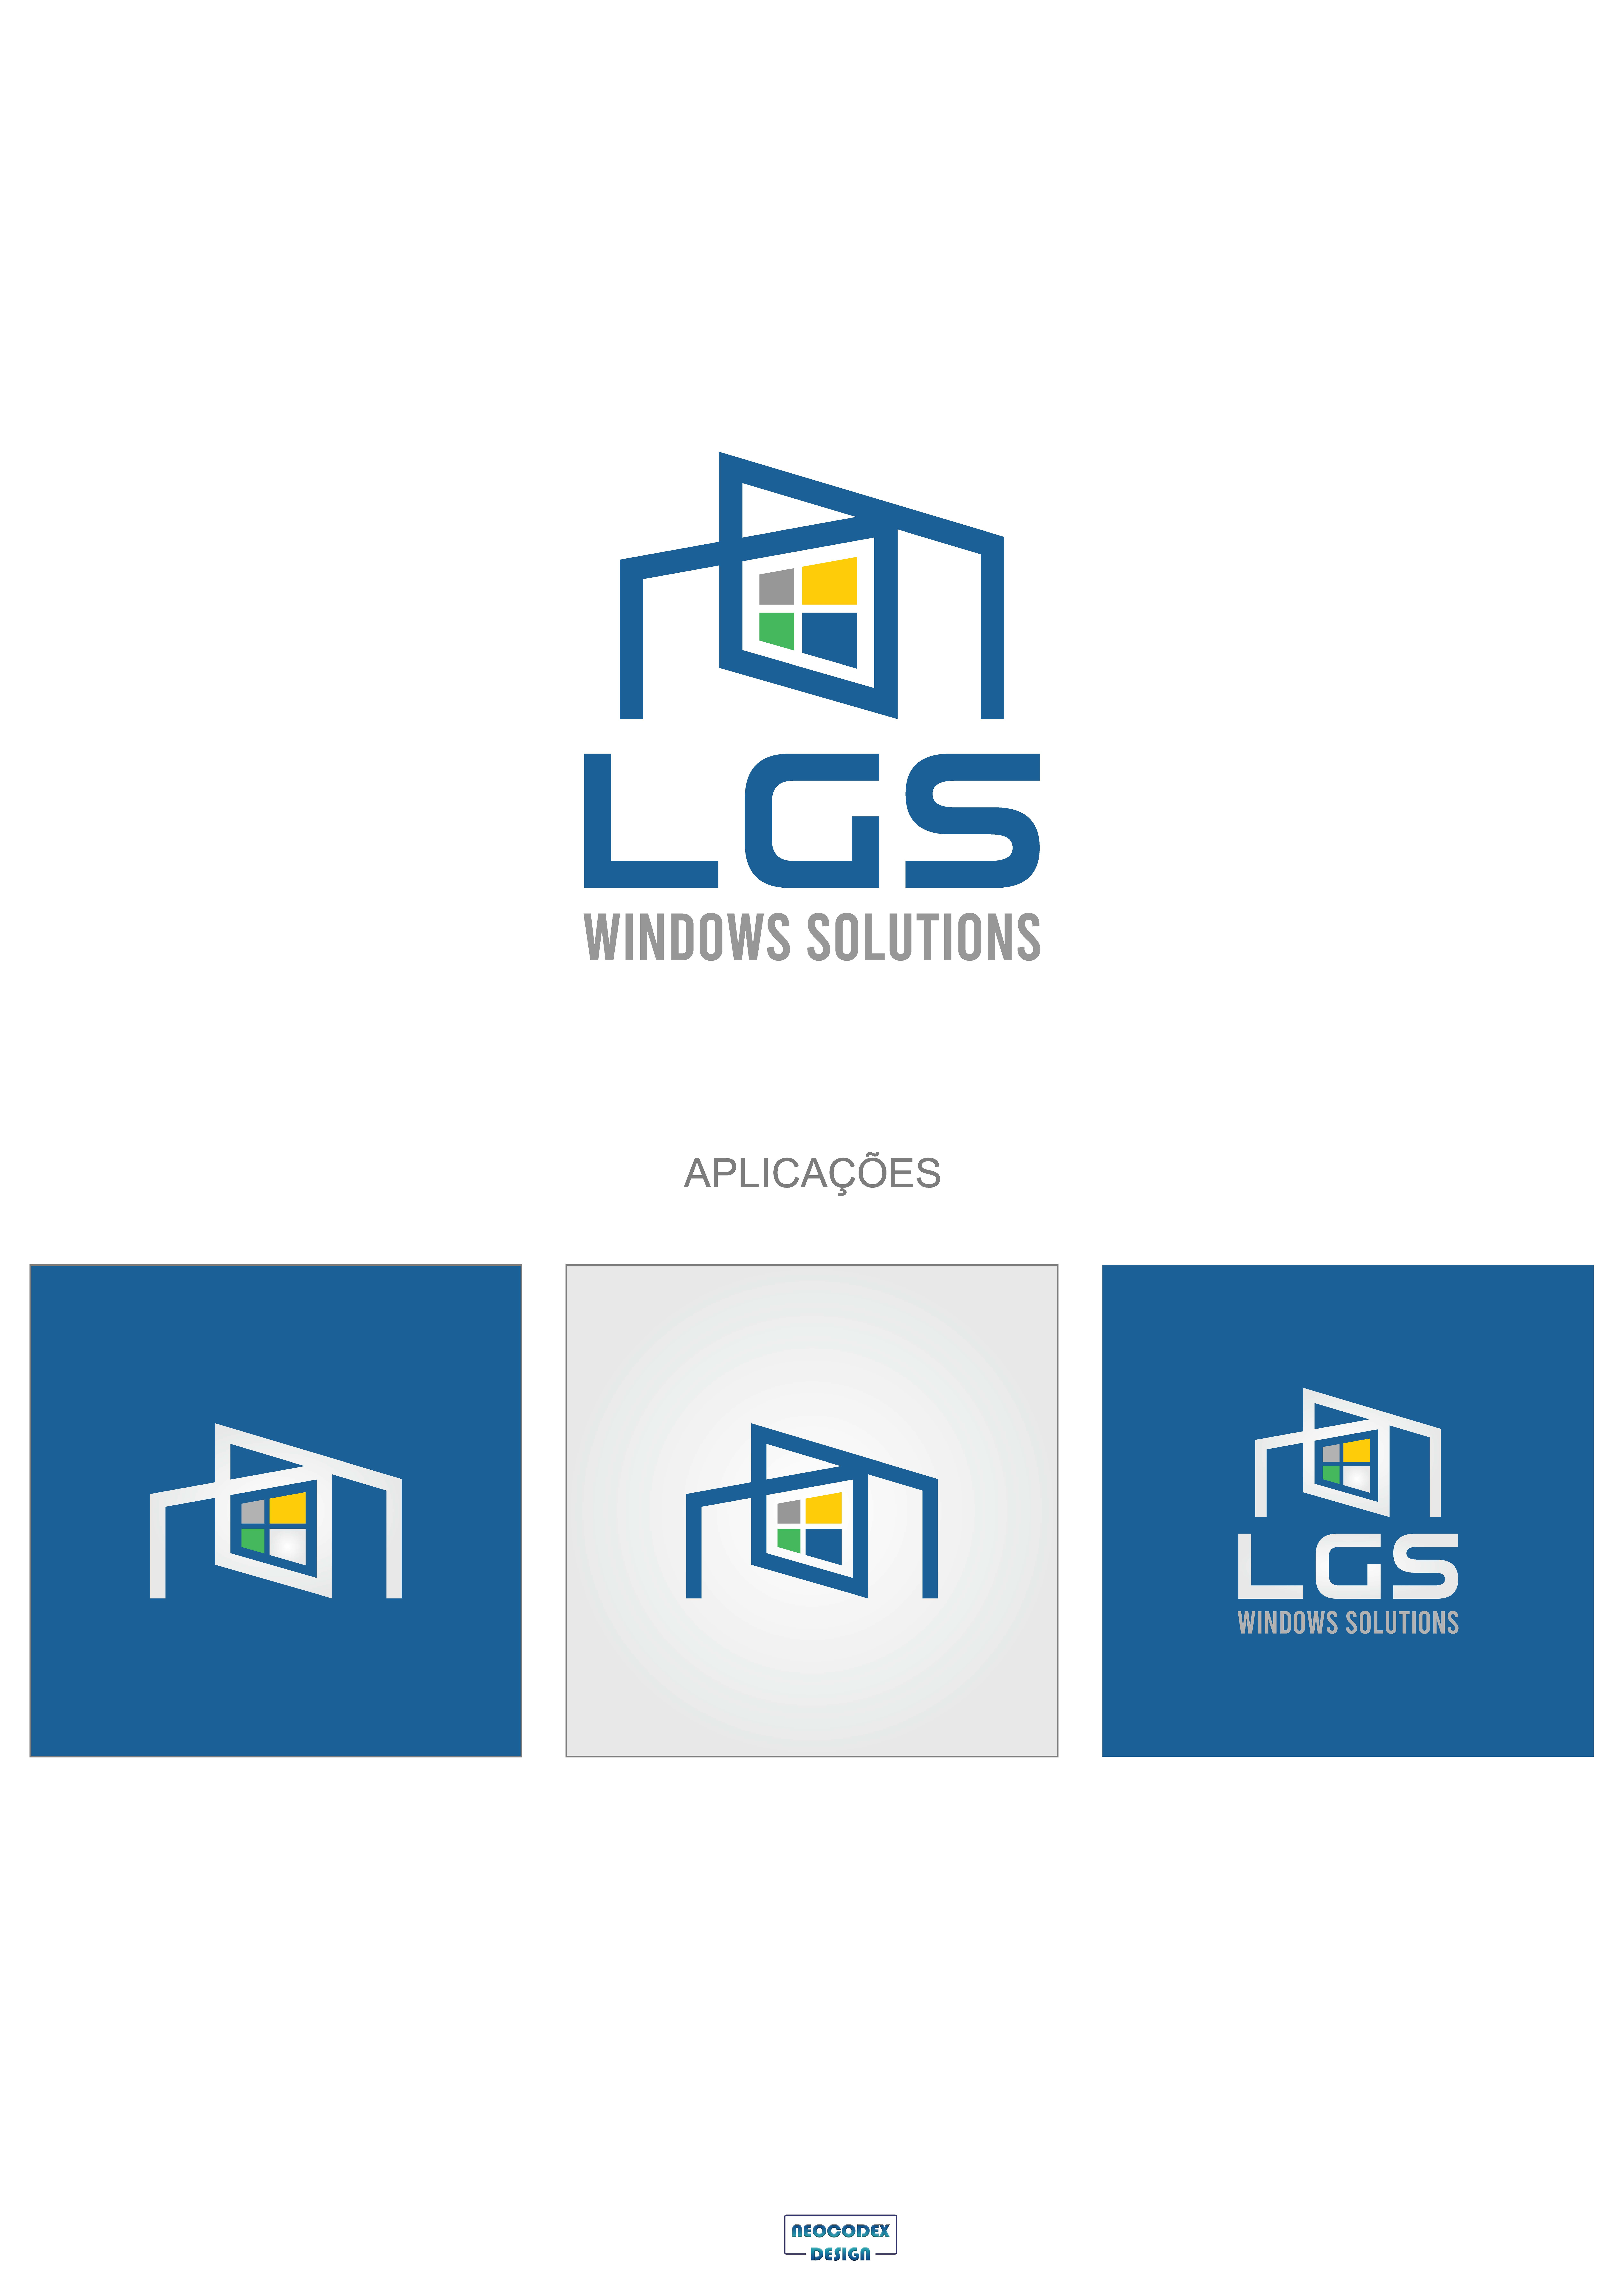 LGS Windows Solutions